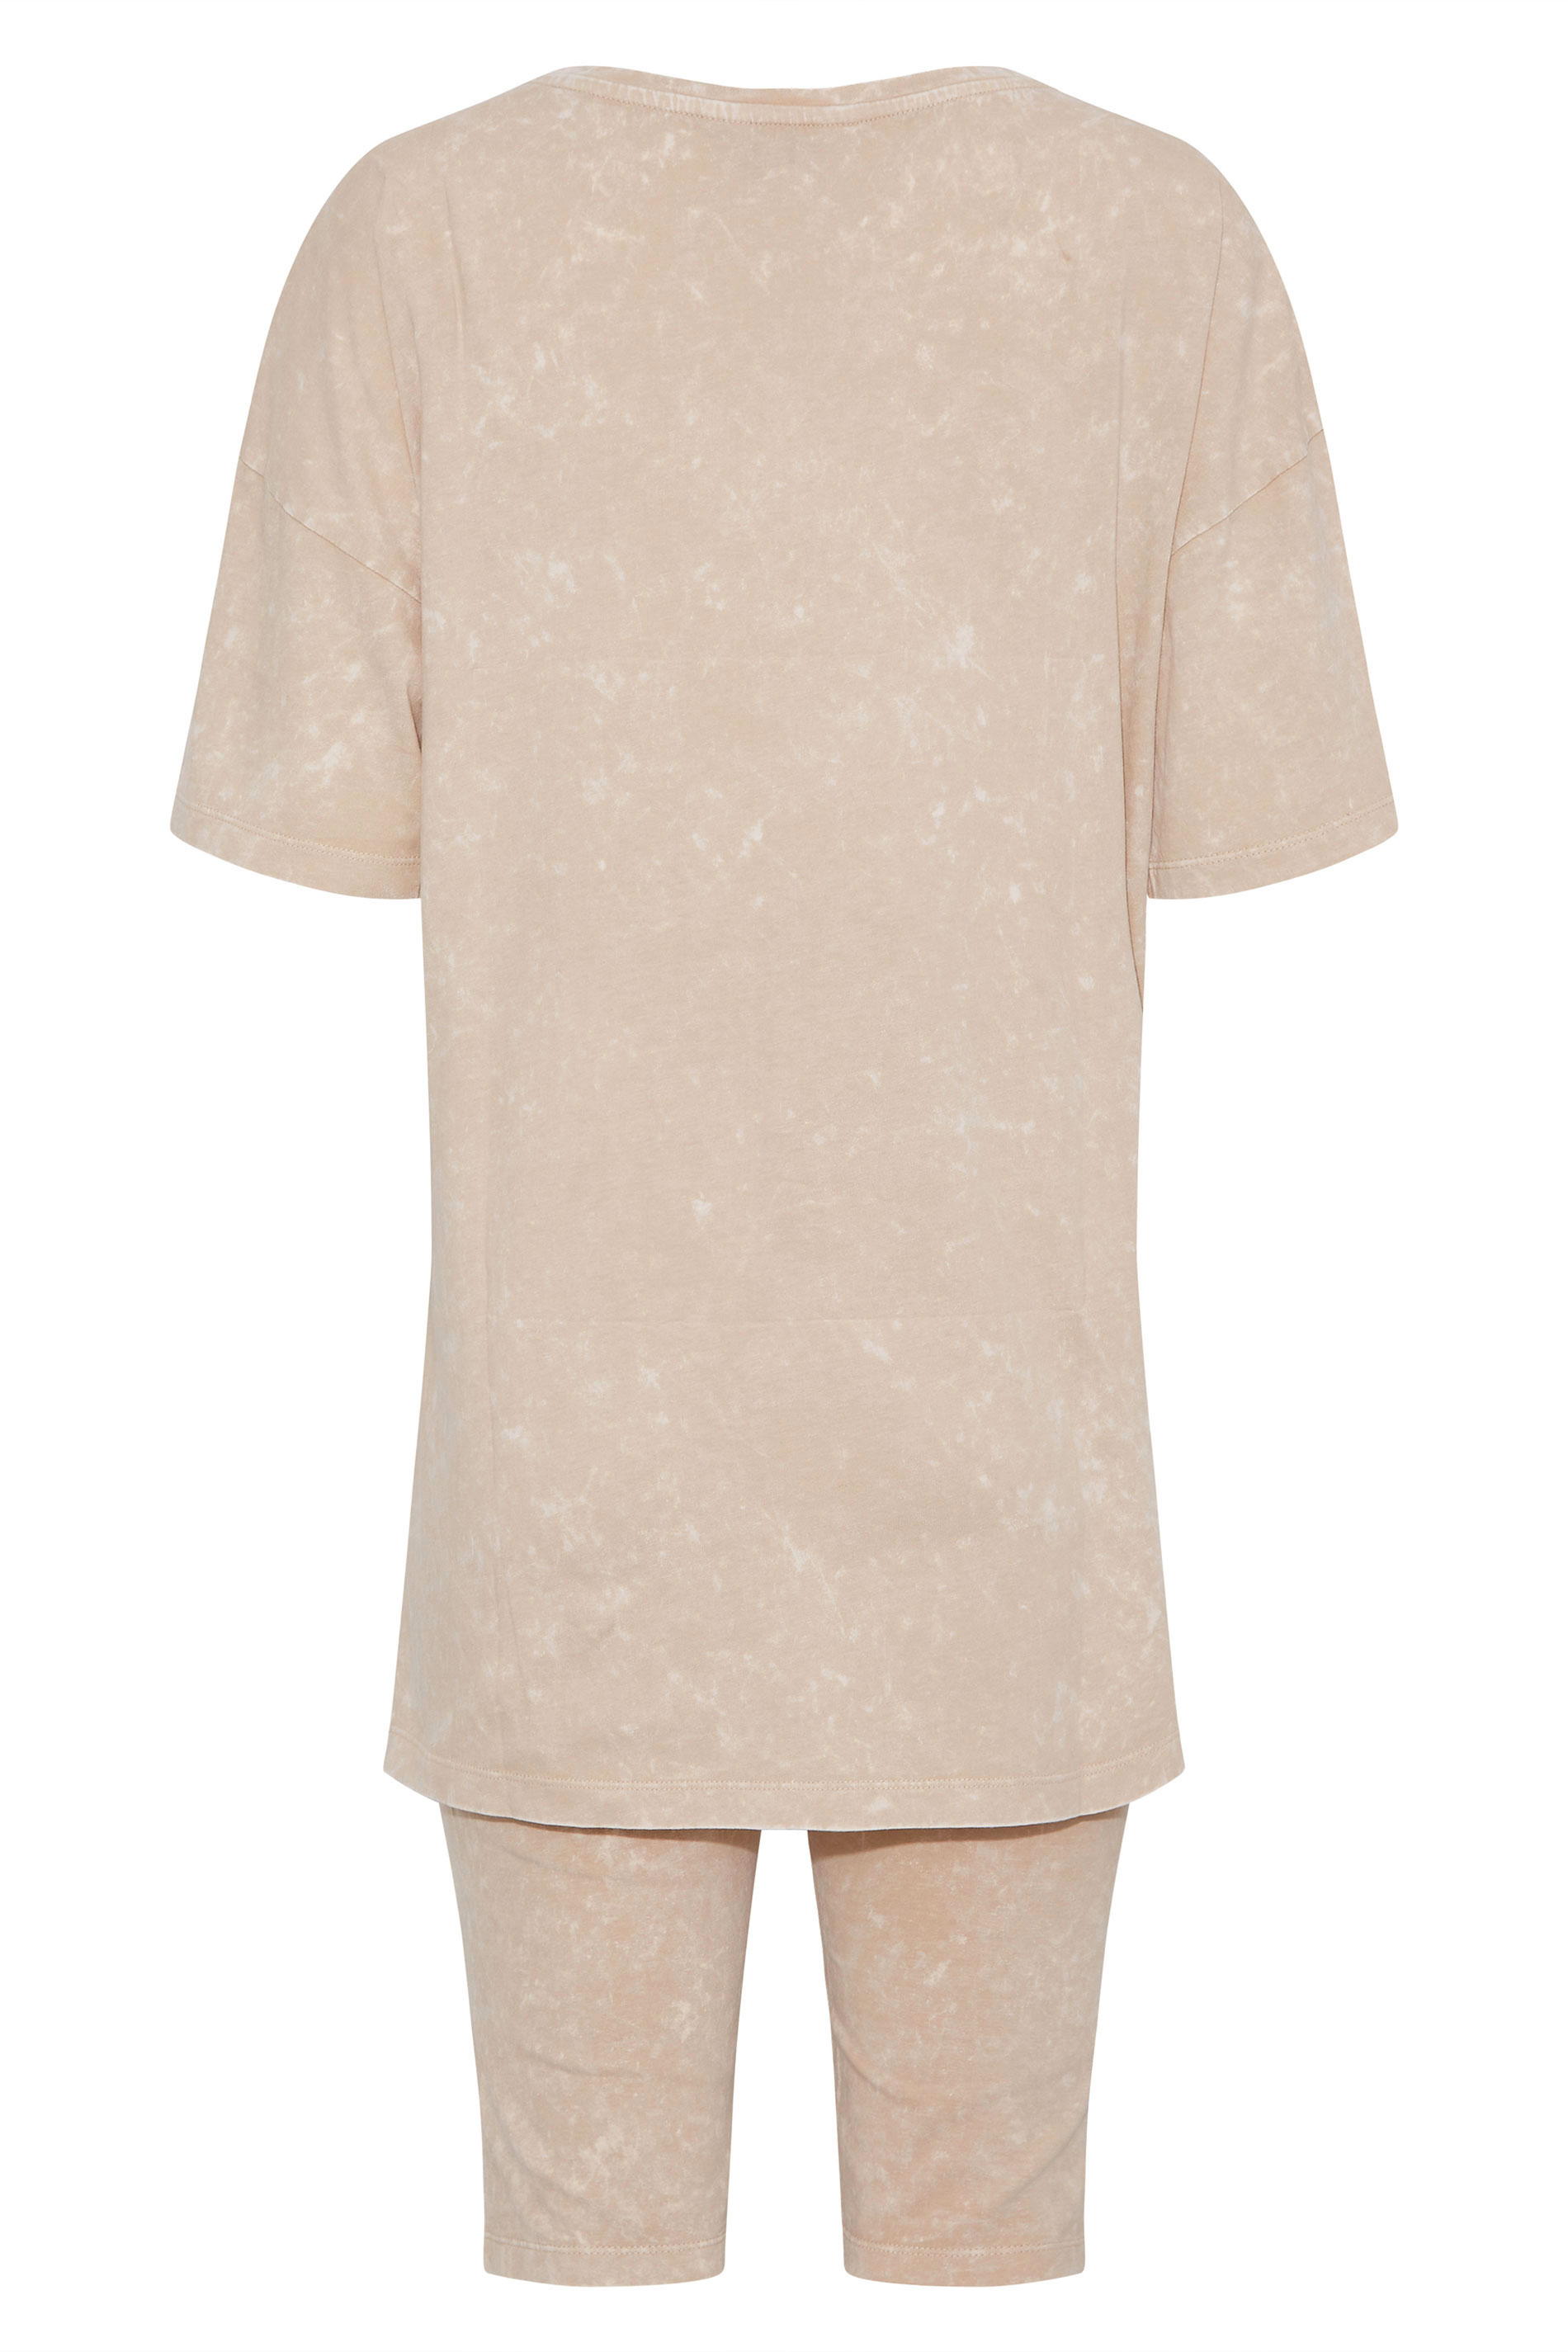 LTS Tall Maternity Beige Brown Acid Wash T-Shirt & Shorts Set | Long Tall Sally 3